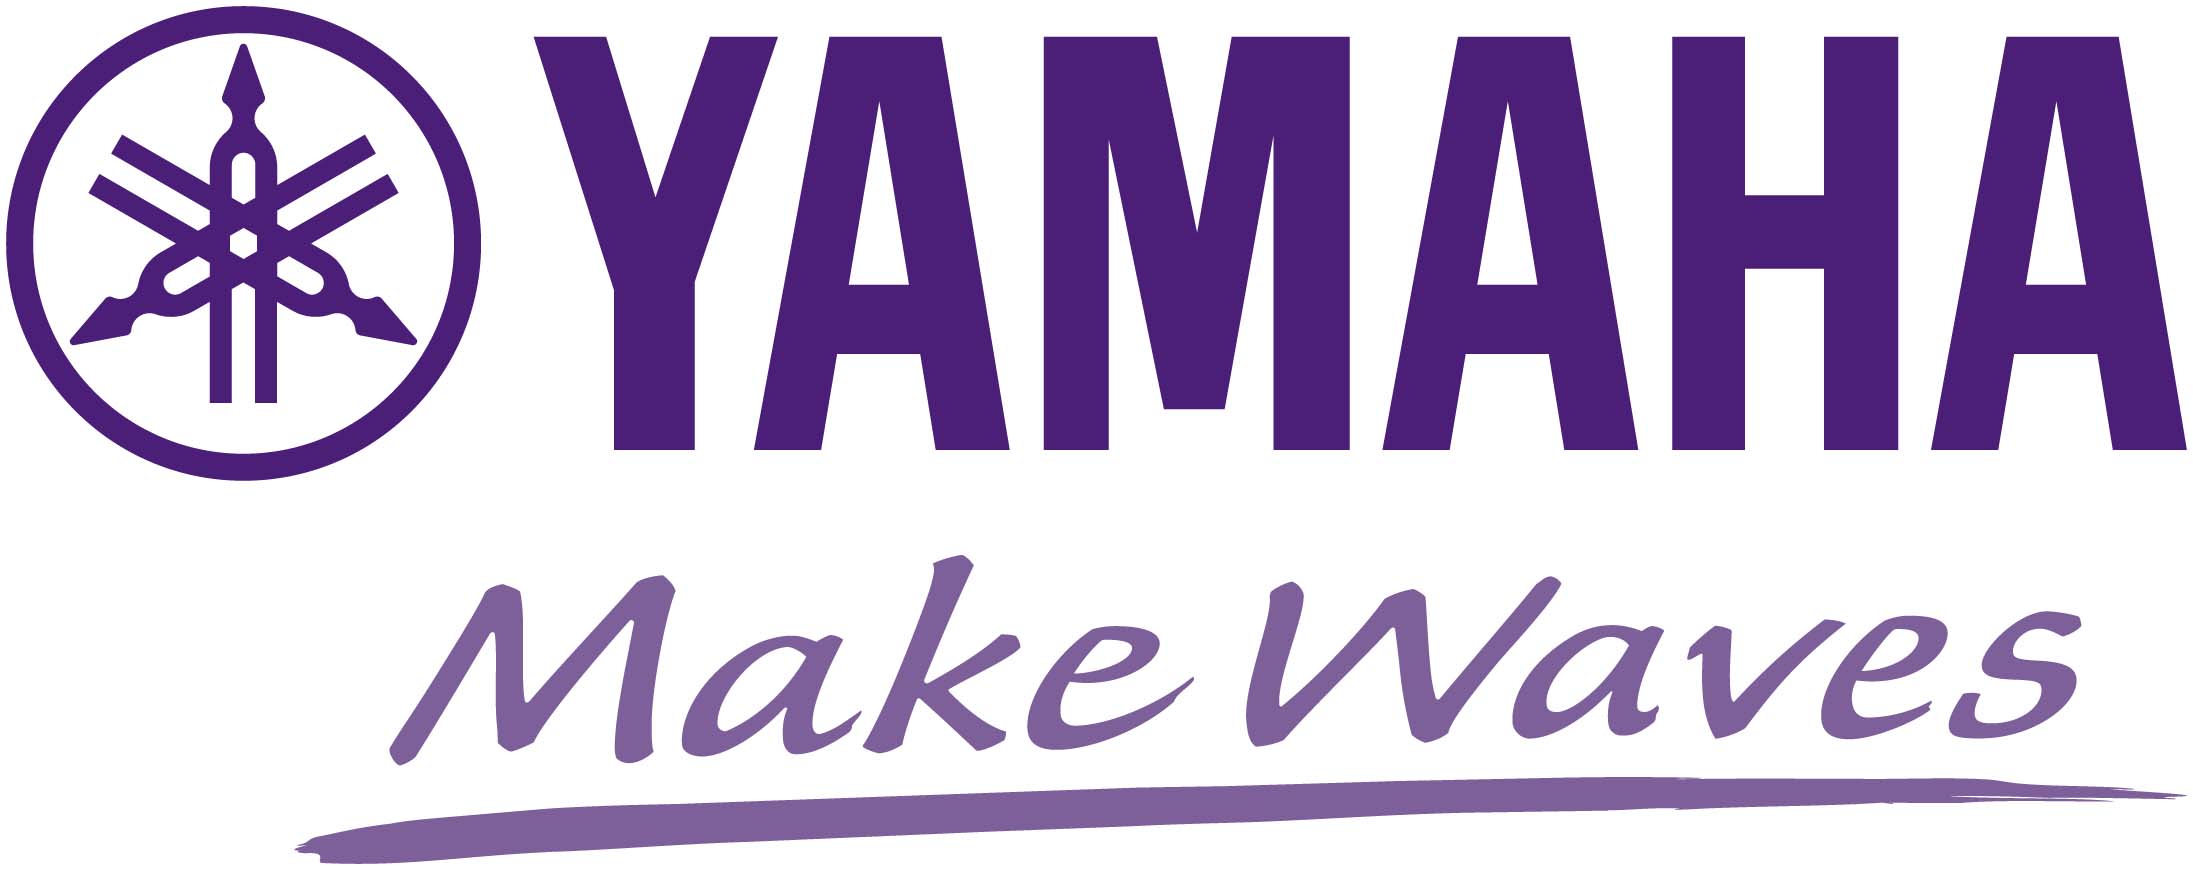 Yamah waves logo